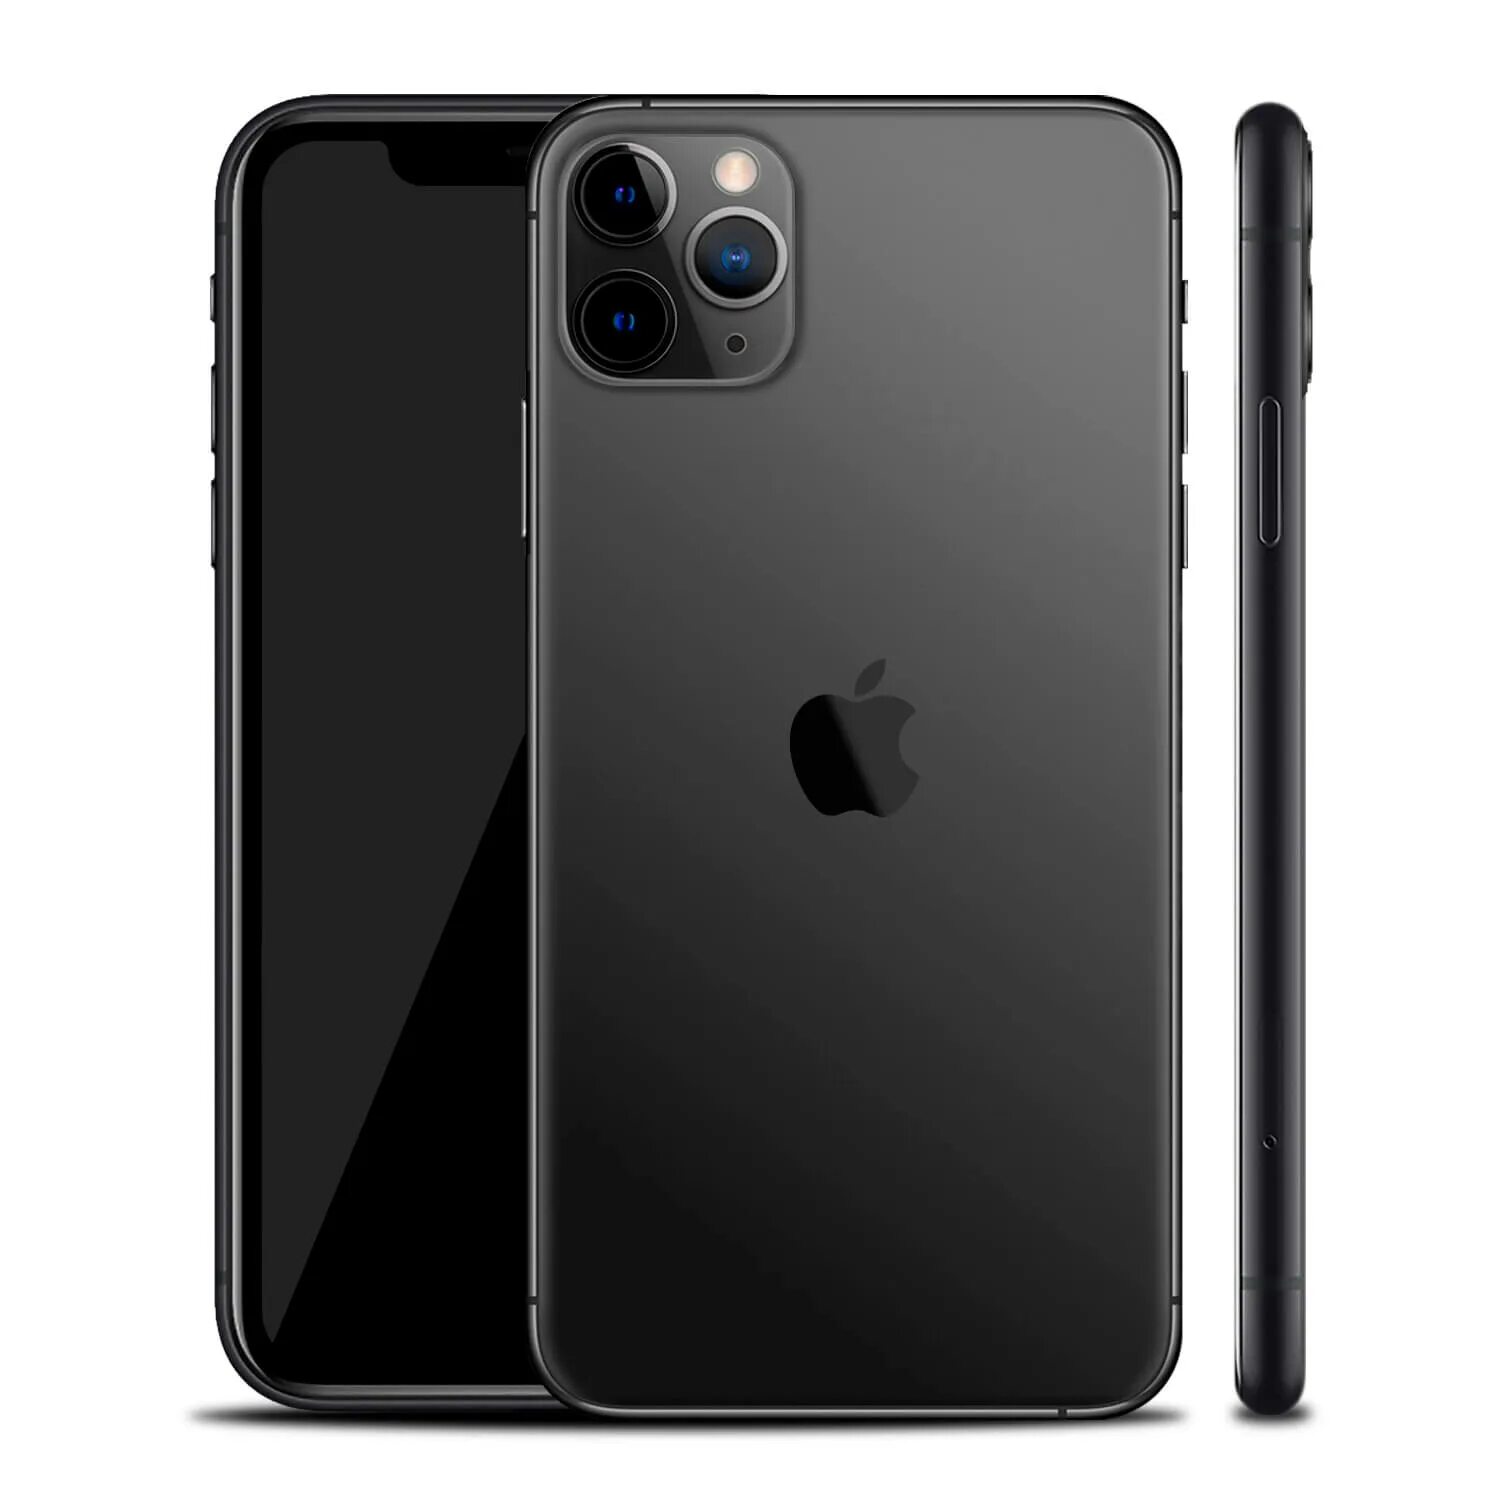 Iphone 11 Pro Max Black. Iphone 11 64gb Black. Iphone 11 Pro Max 256gb черный. Iphone 11 Pro 64gb.